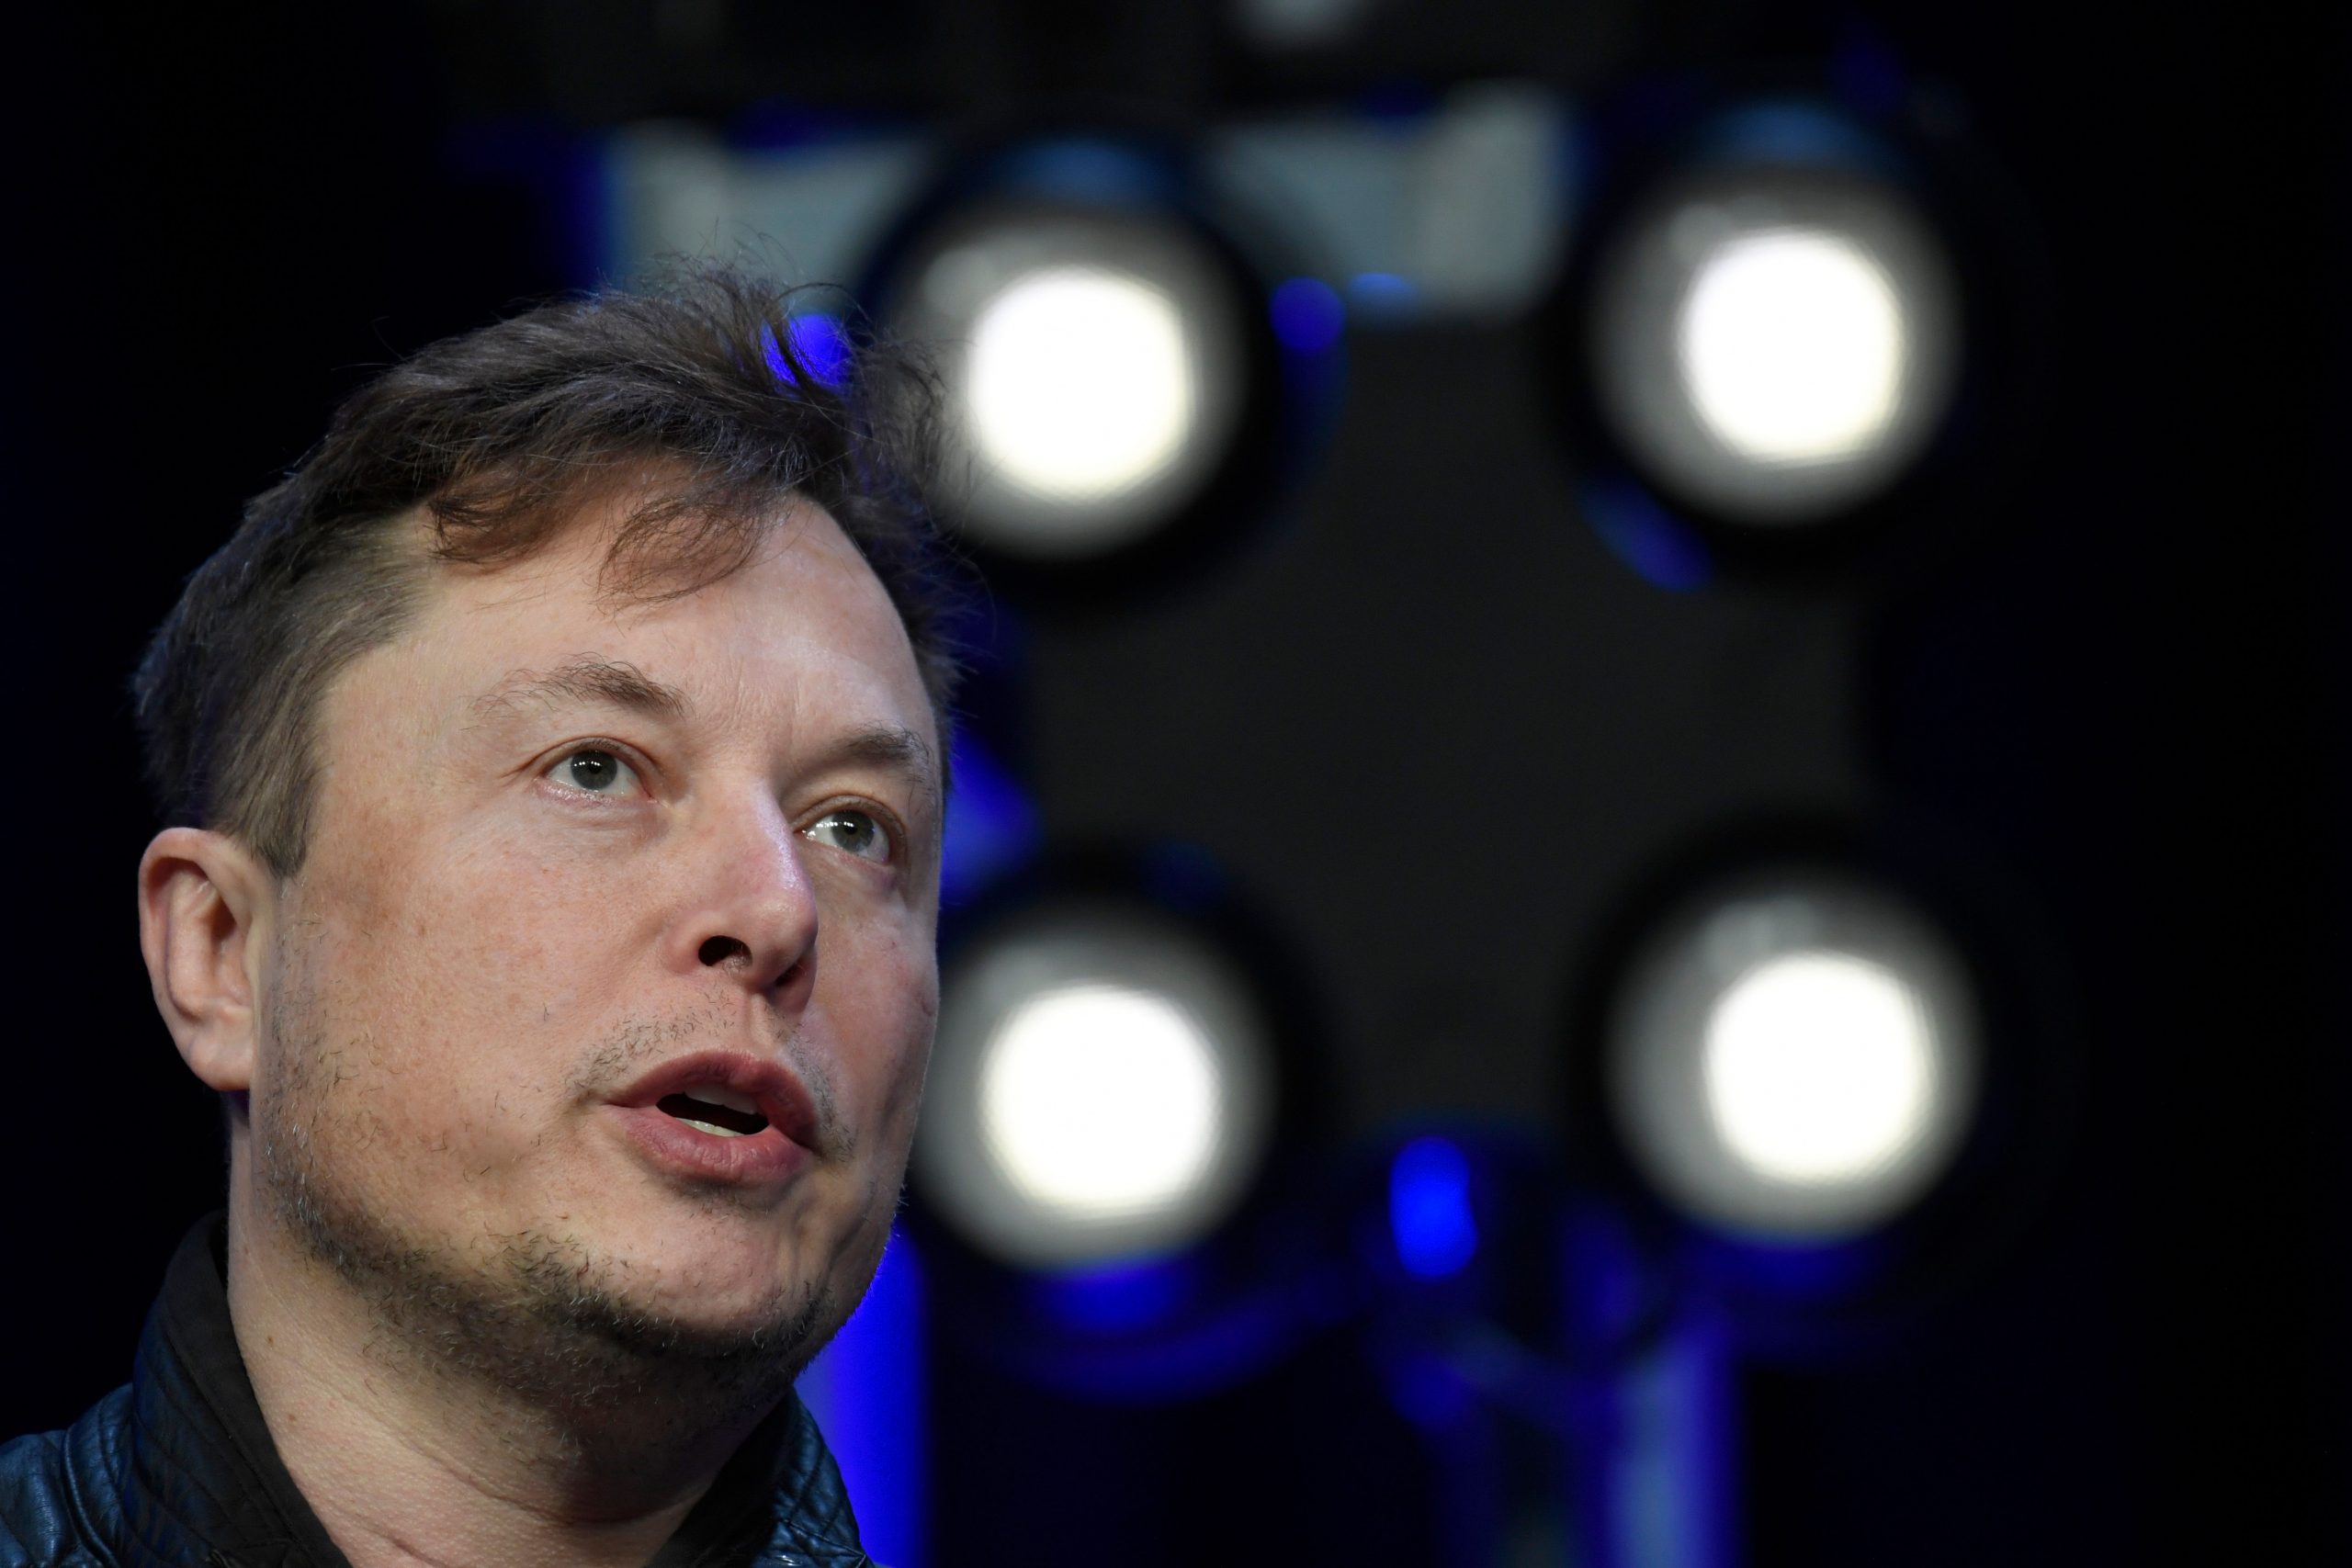 Elon Musk hints at new social media platform in cryptic tweet